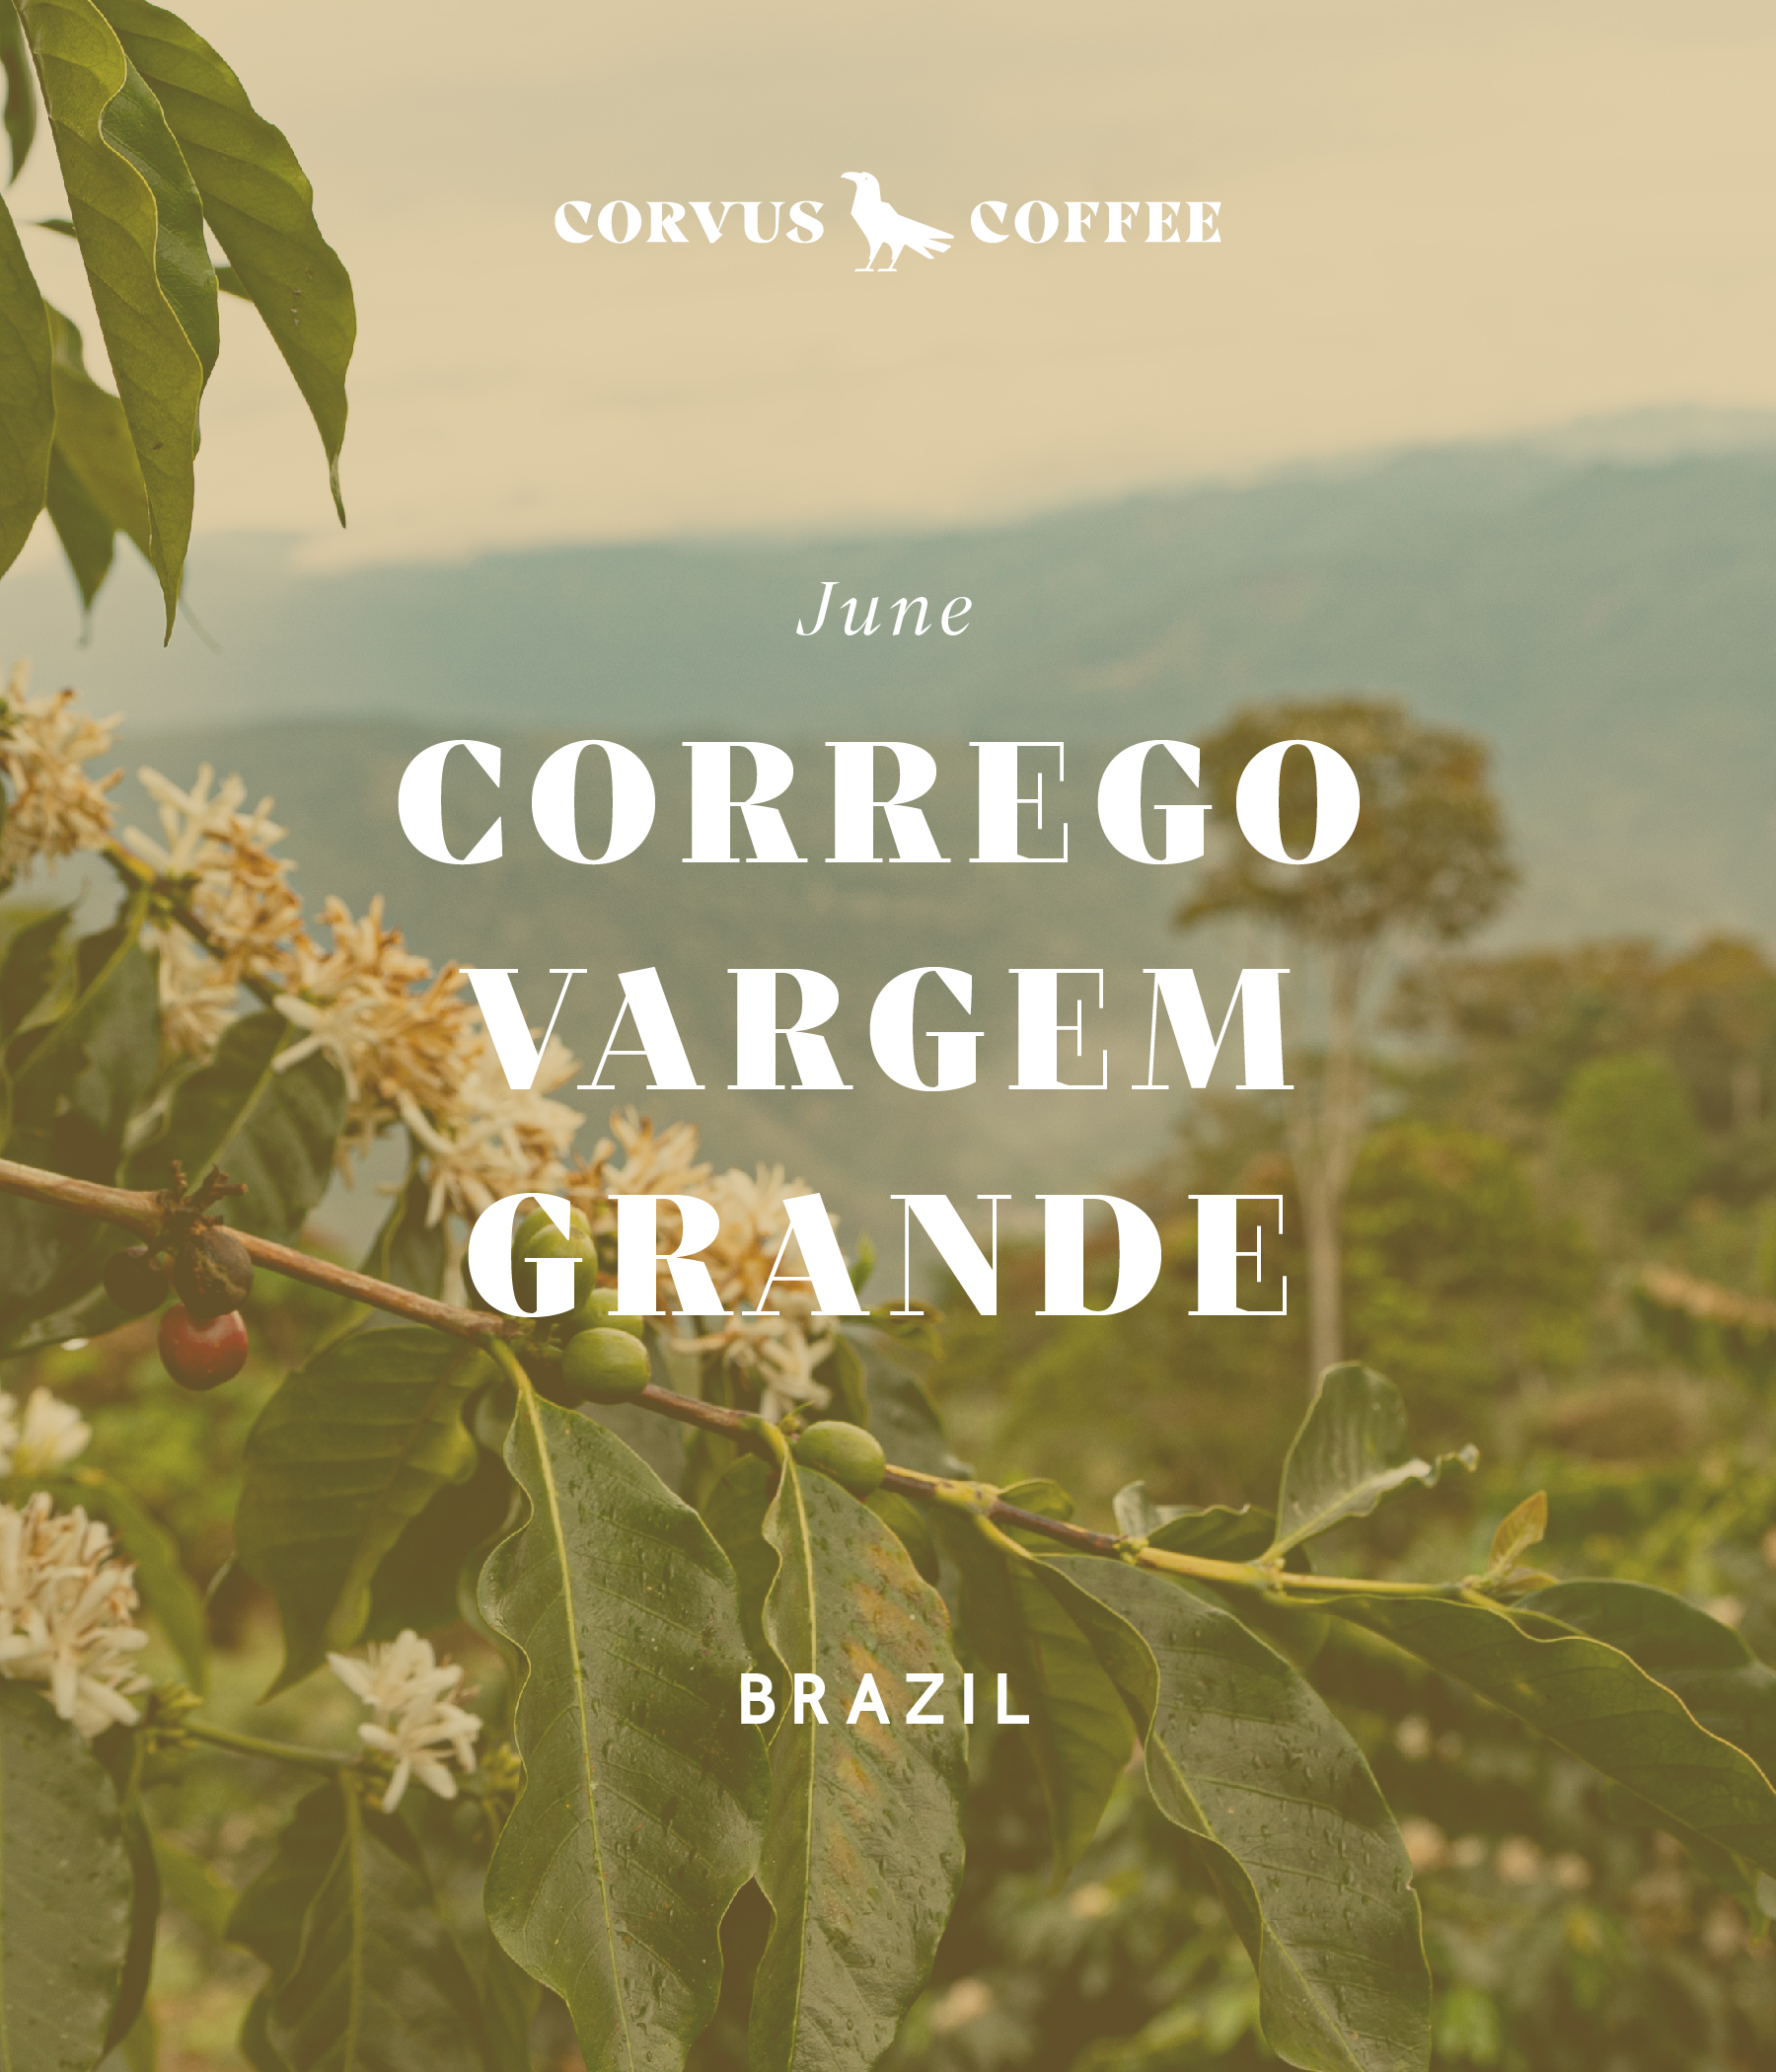 Brazilian single origin coffee